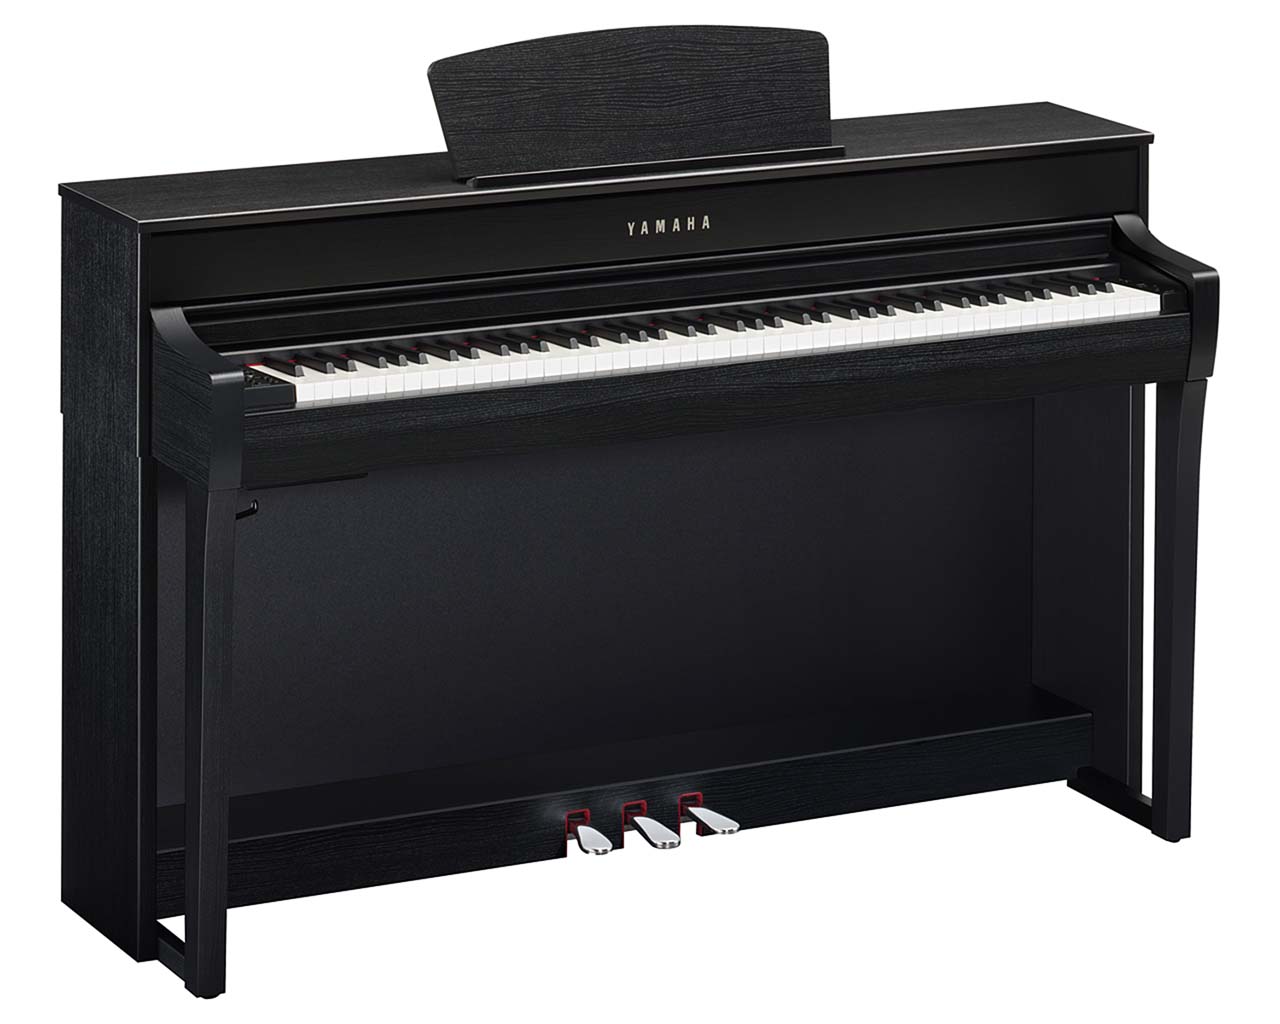 Yamaha-Clavinova-CLP-735-B-Digitalpiano-schwarz-Pianohaus-Filipski